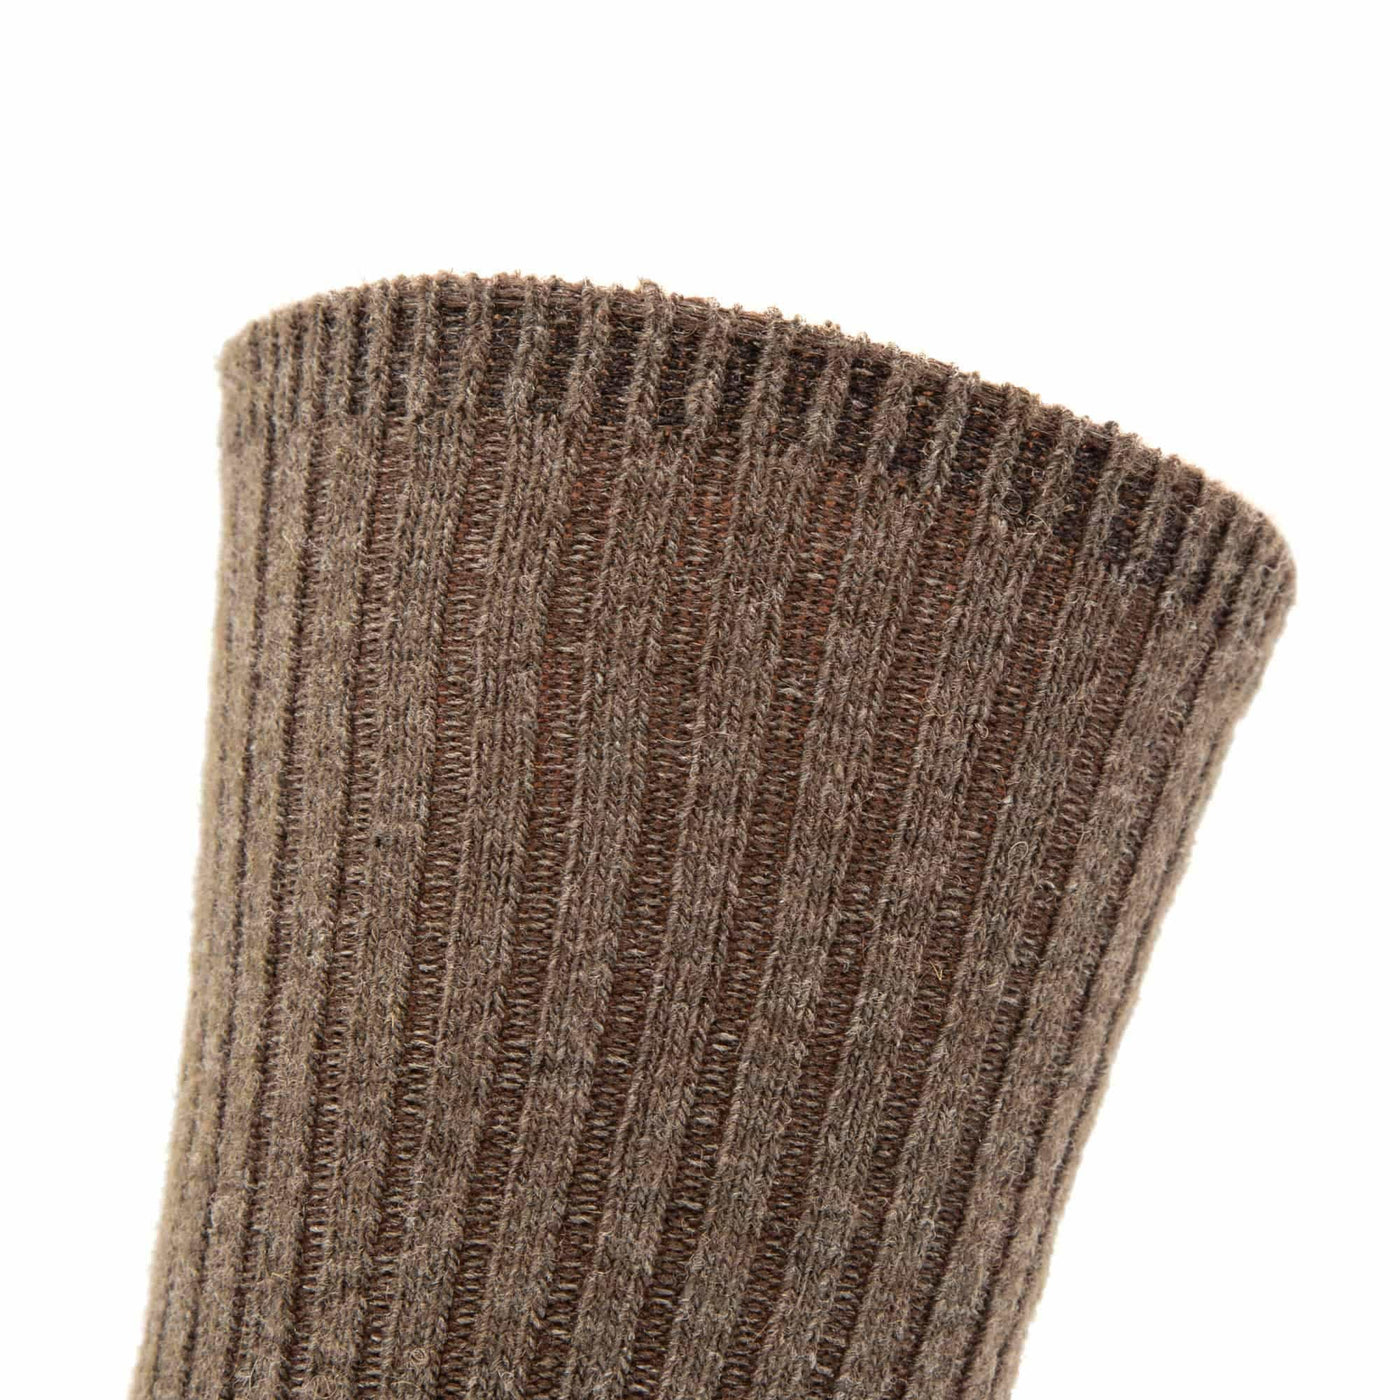 Casual Crew Bison Socks – The Buffalo Wool Co.